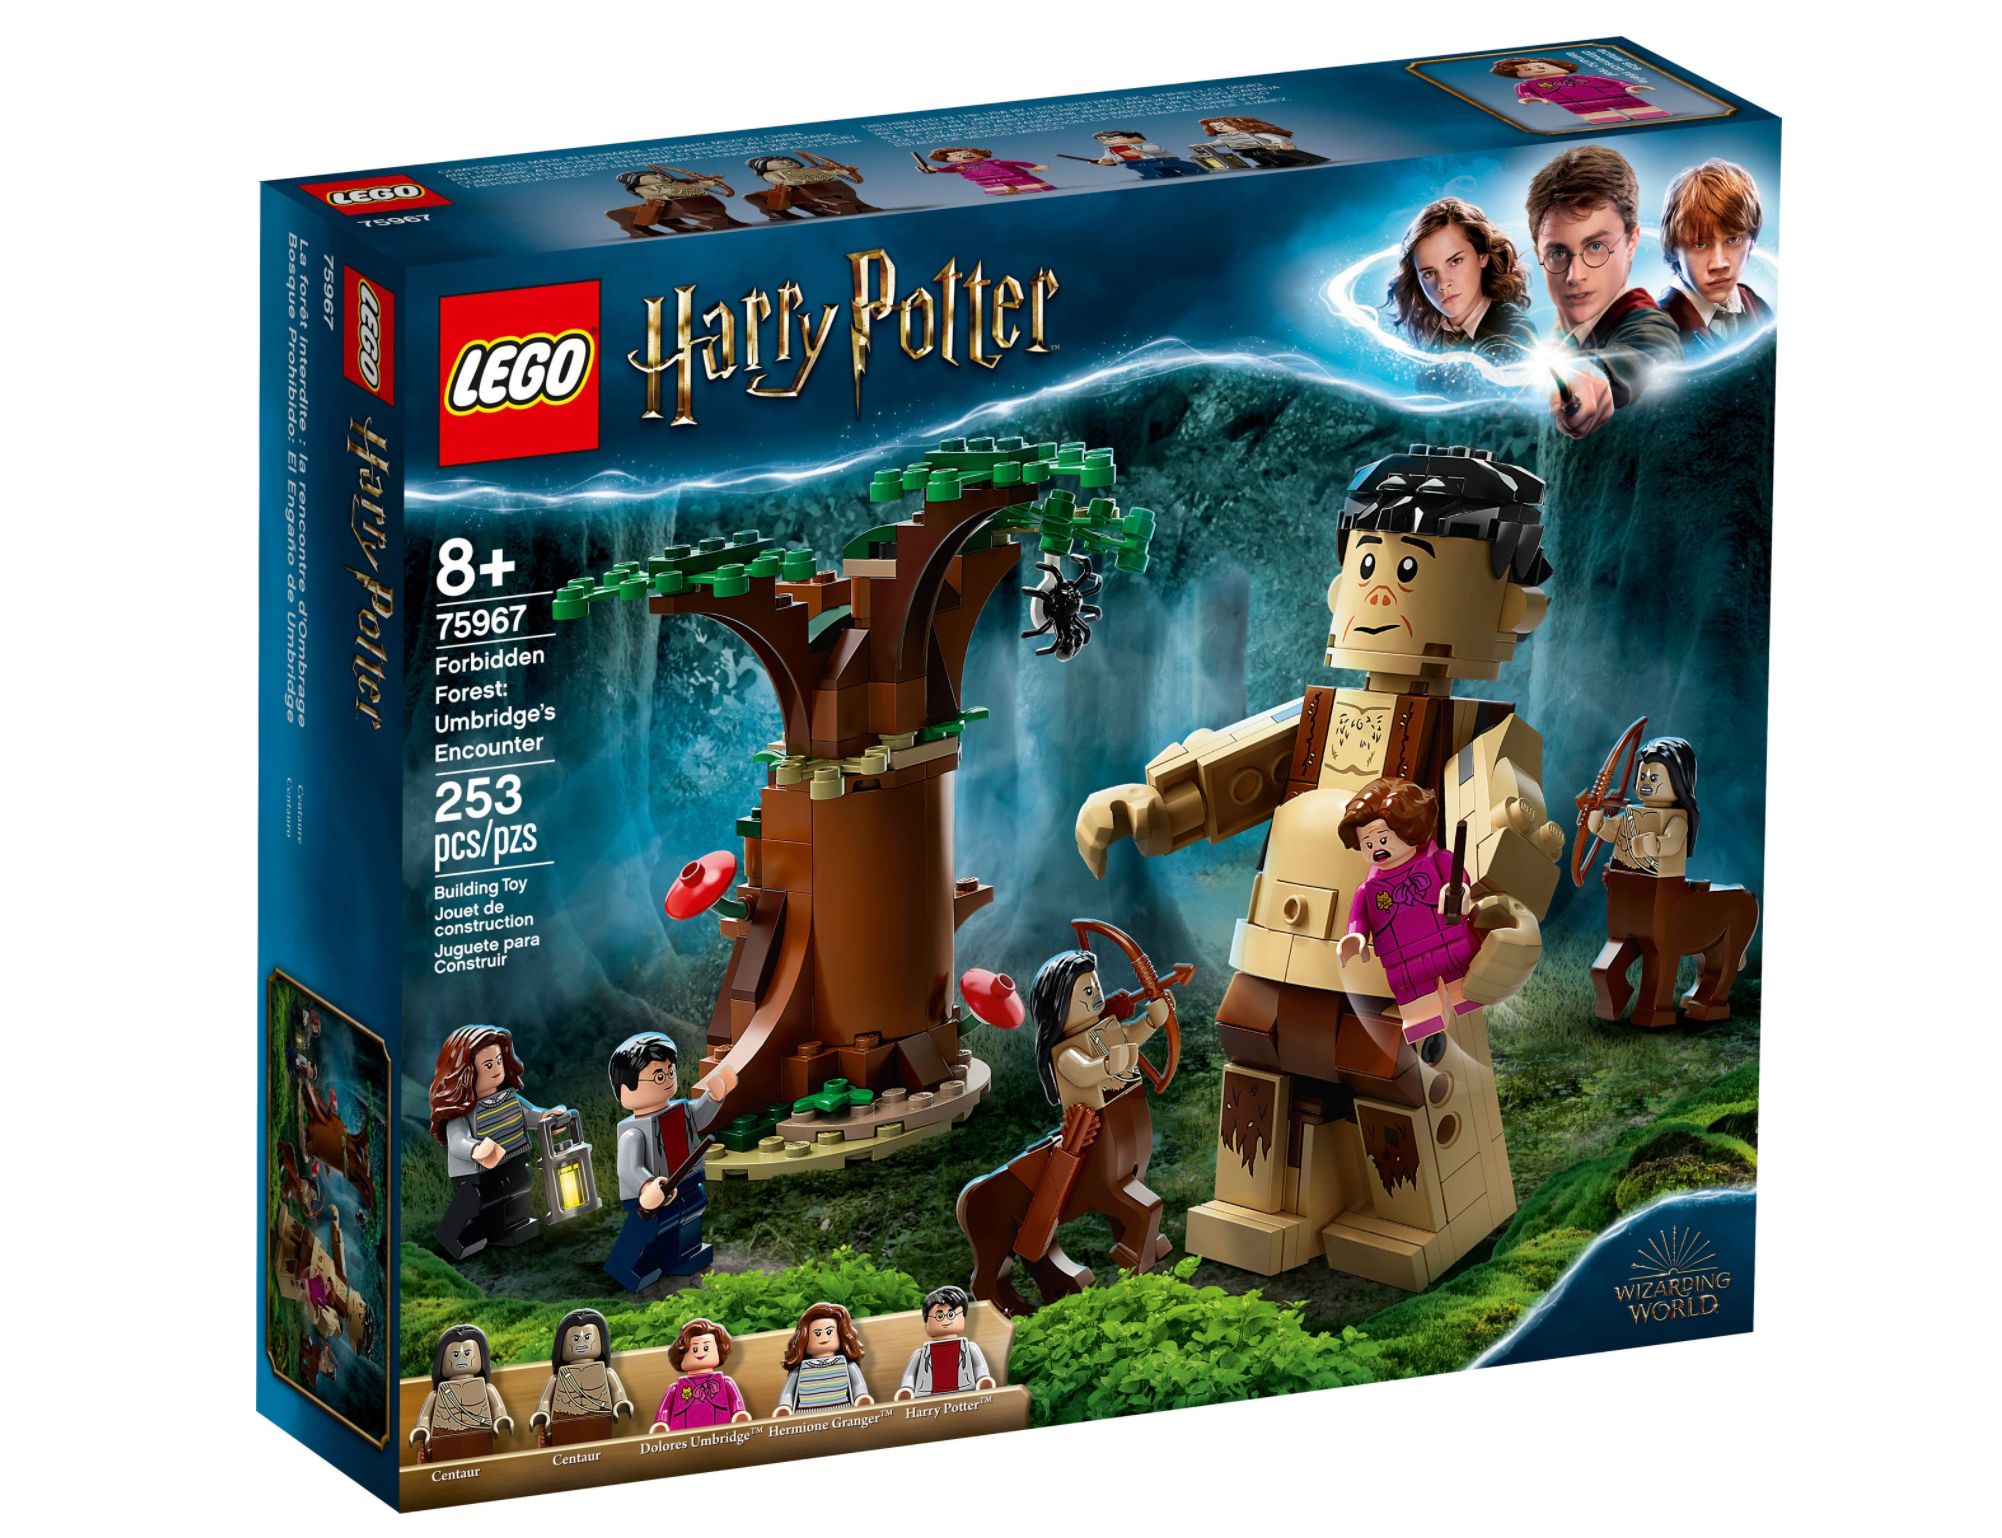 LEGO: Harry Potter - Forbidden Forest: Umbridge's Encounter